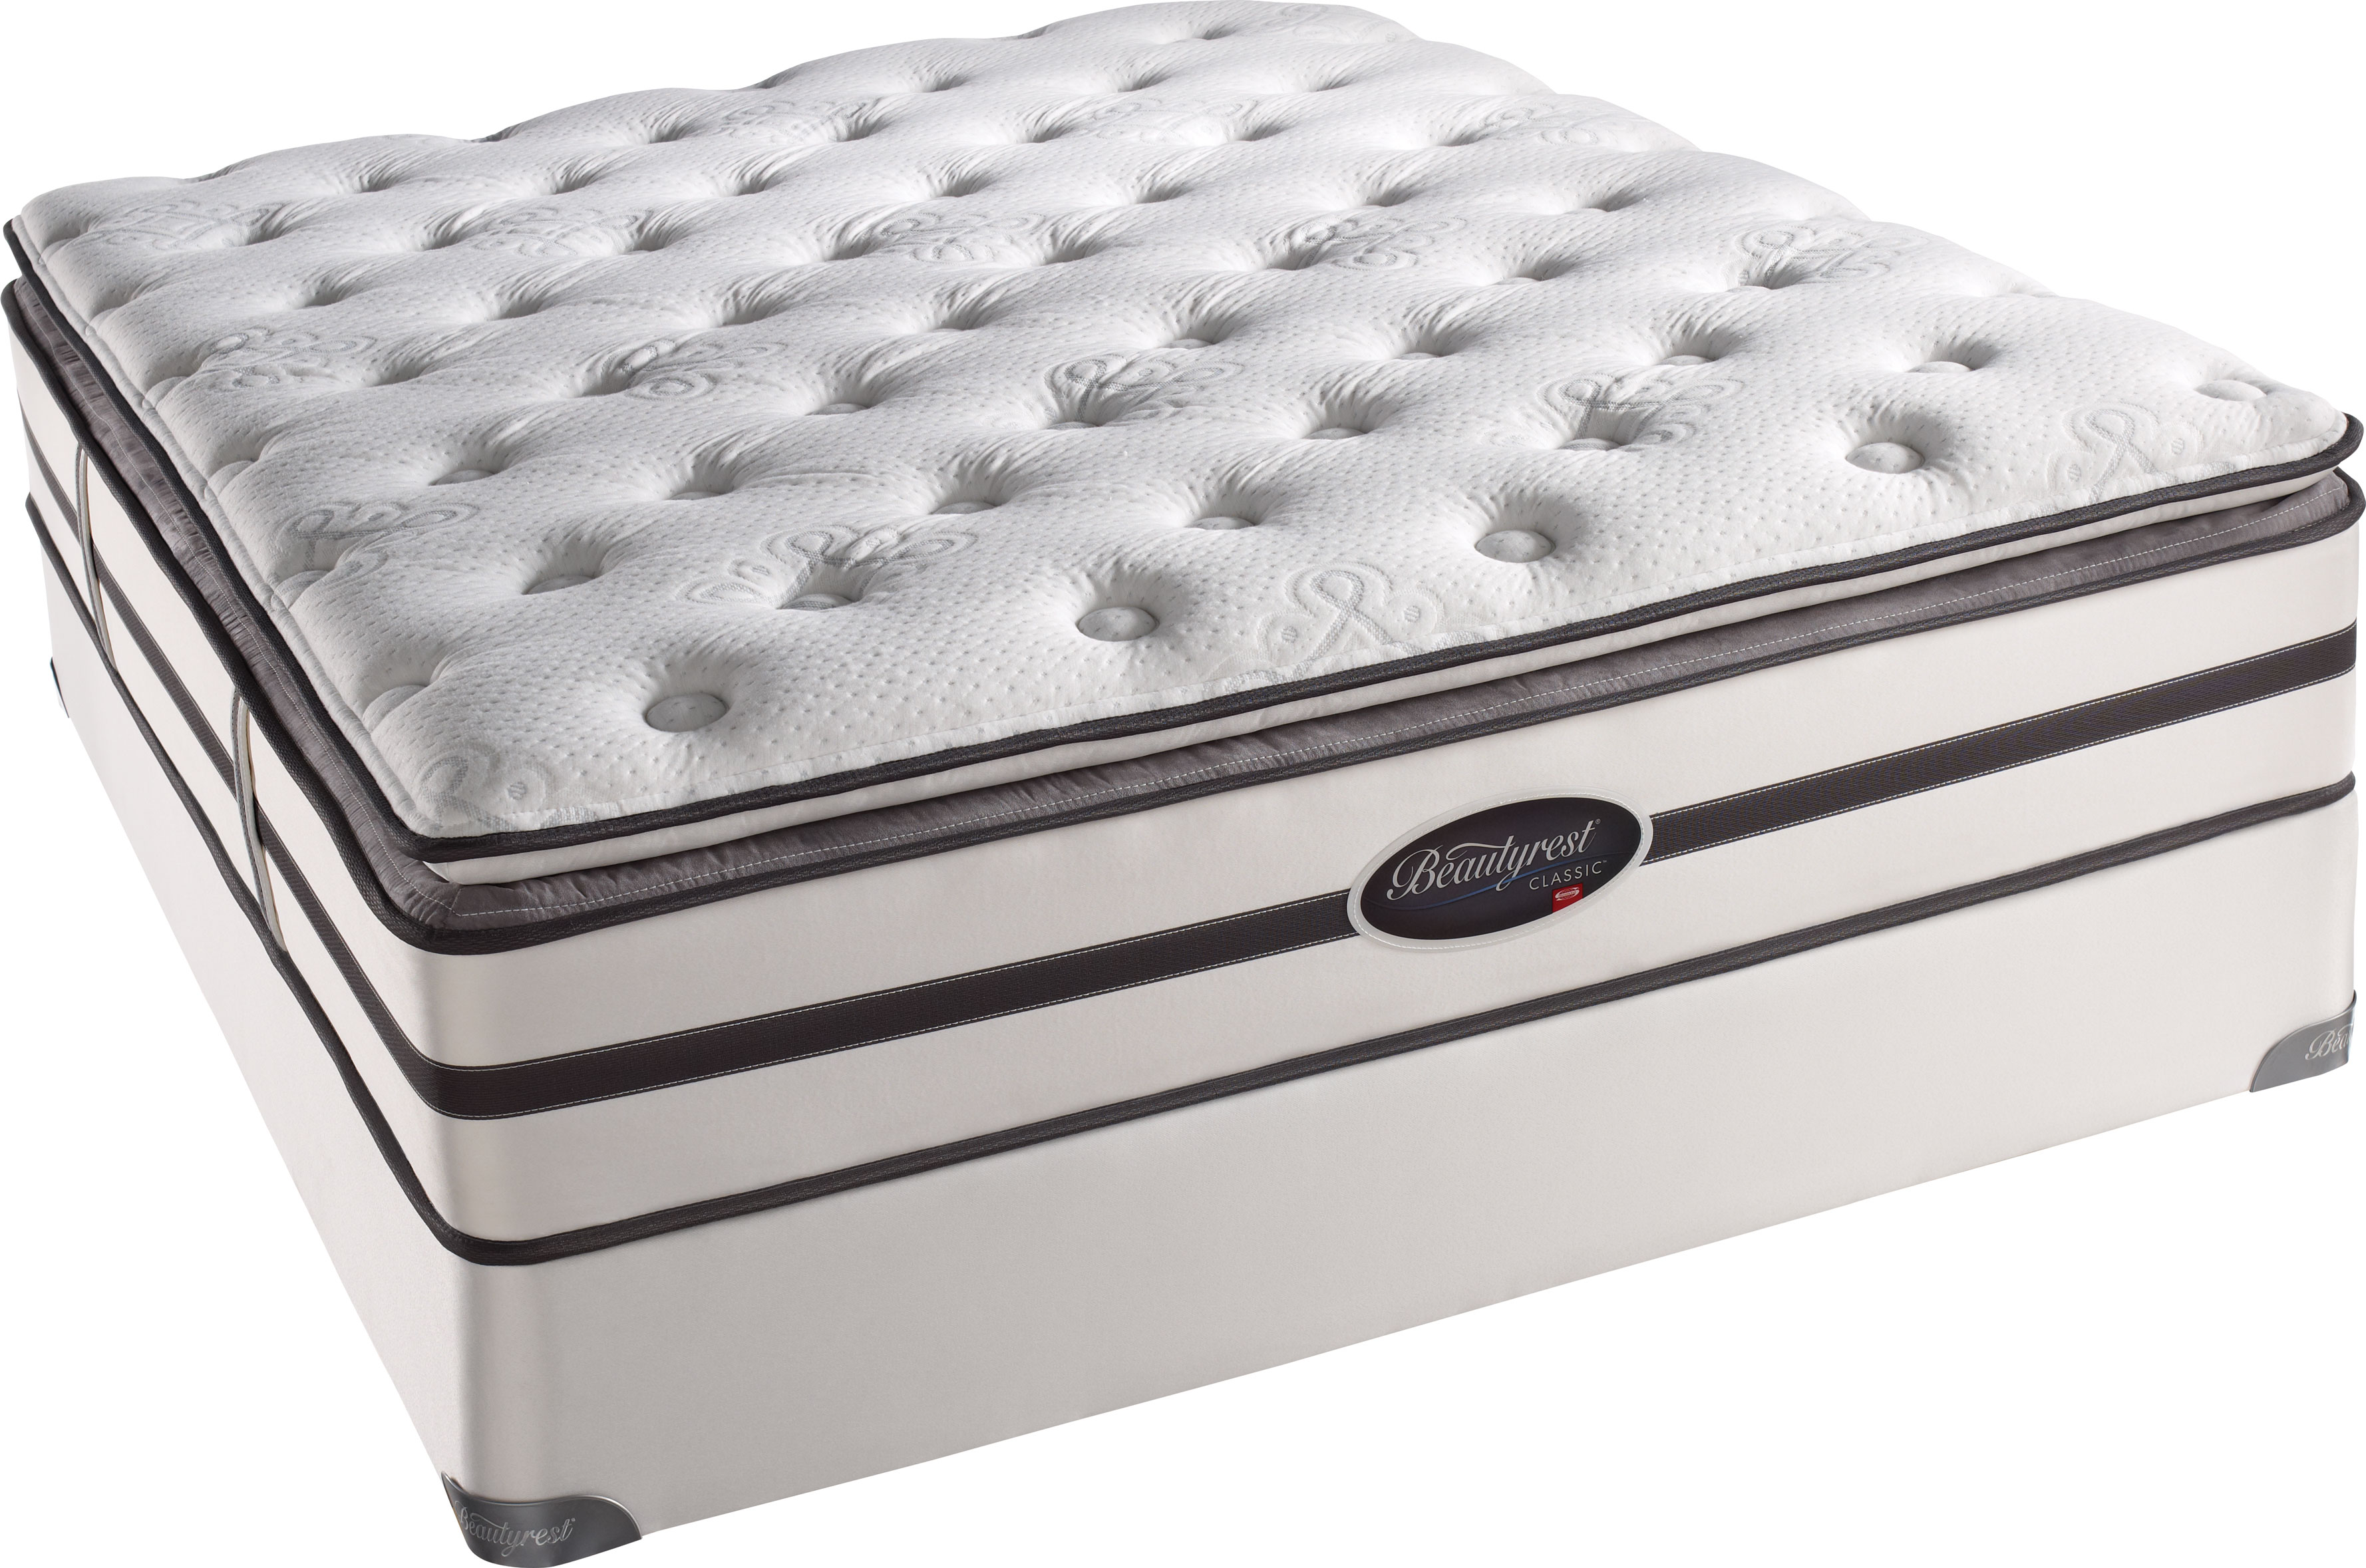 beautyrest memory foam mattress price